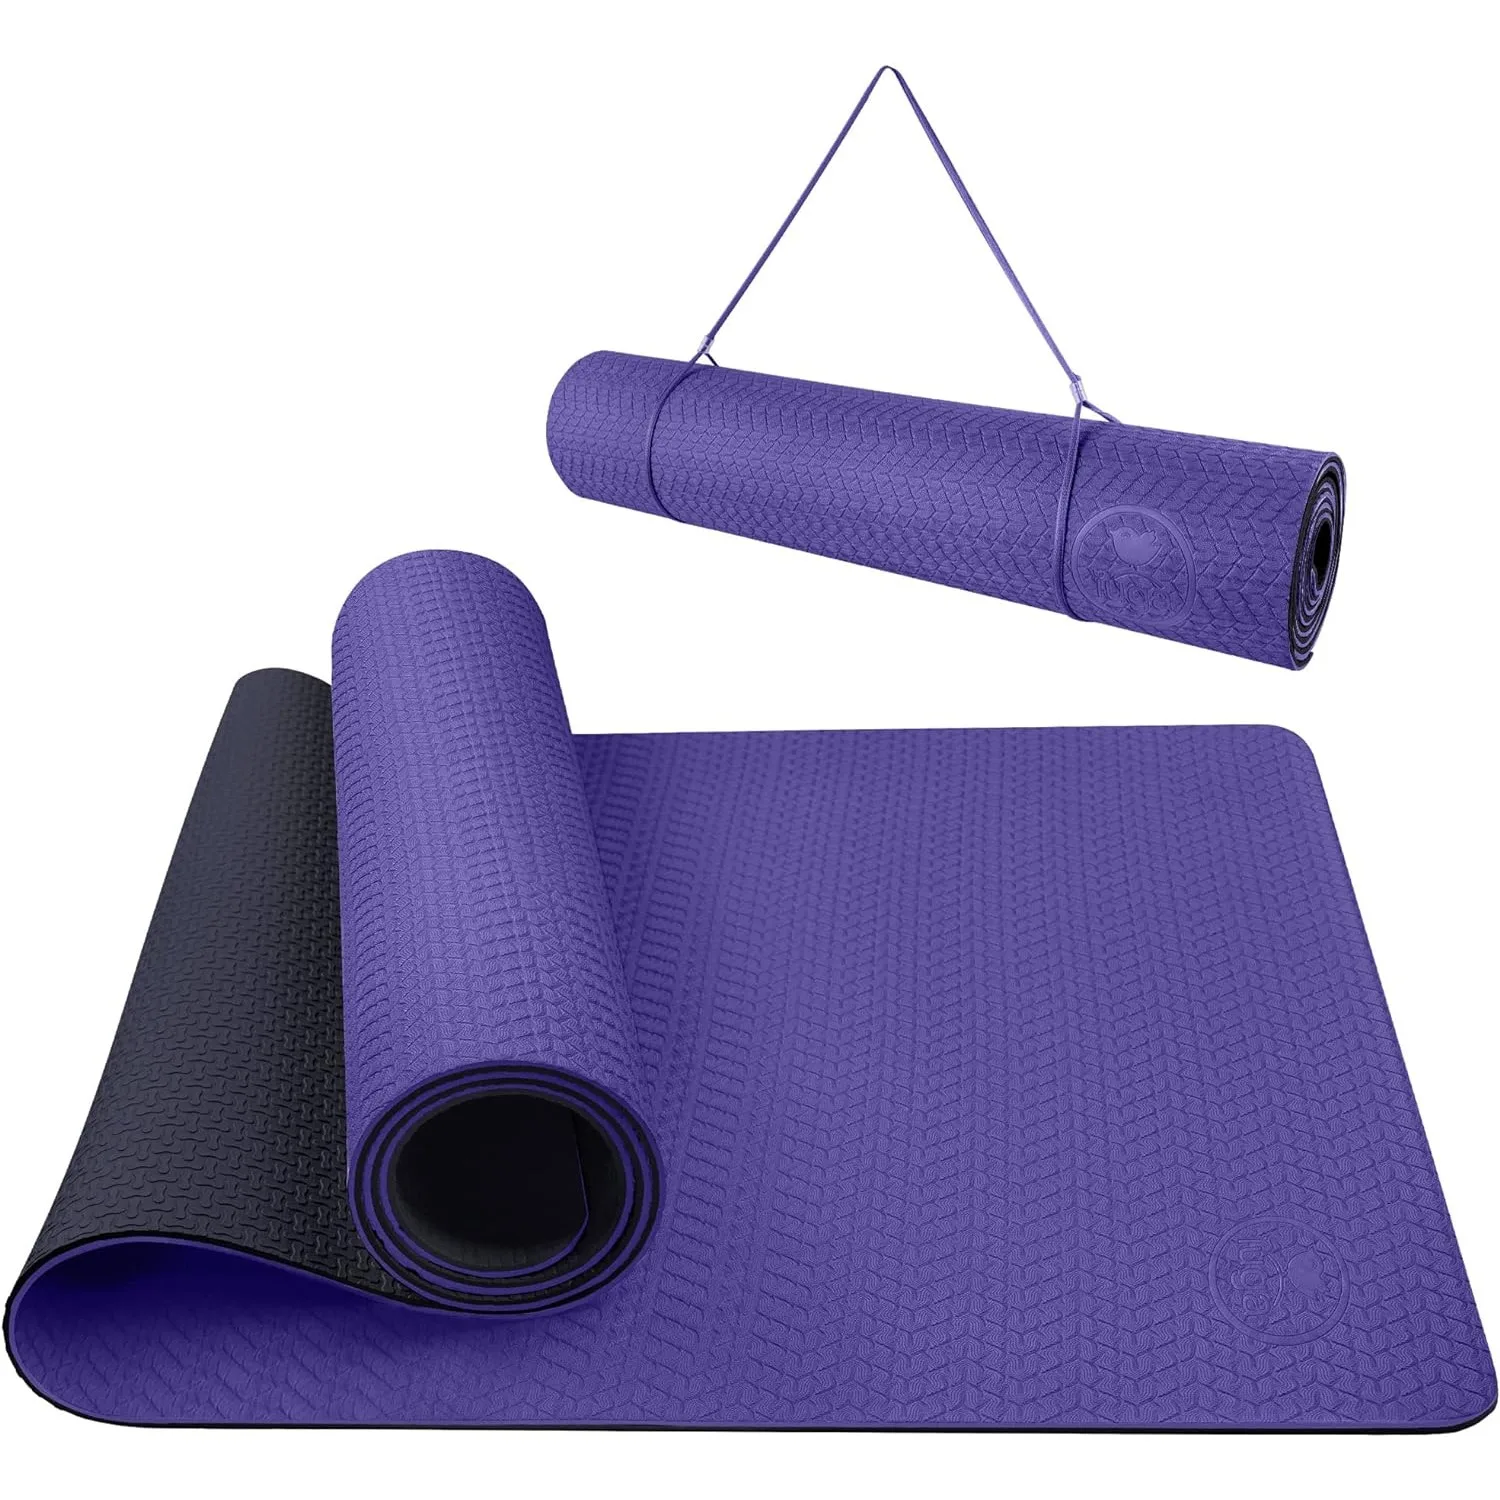 

IUGA Yoga Mat Non Slip Anti-tear Yoga Mats Eco Friendly Hot Yoga Mat Thick Workout & Exercise Mat for Pilates and Fitness